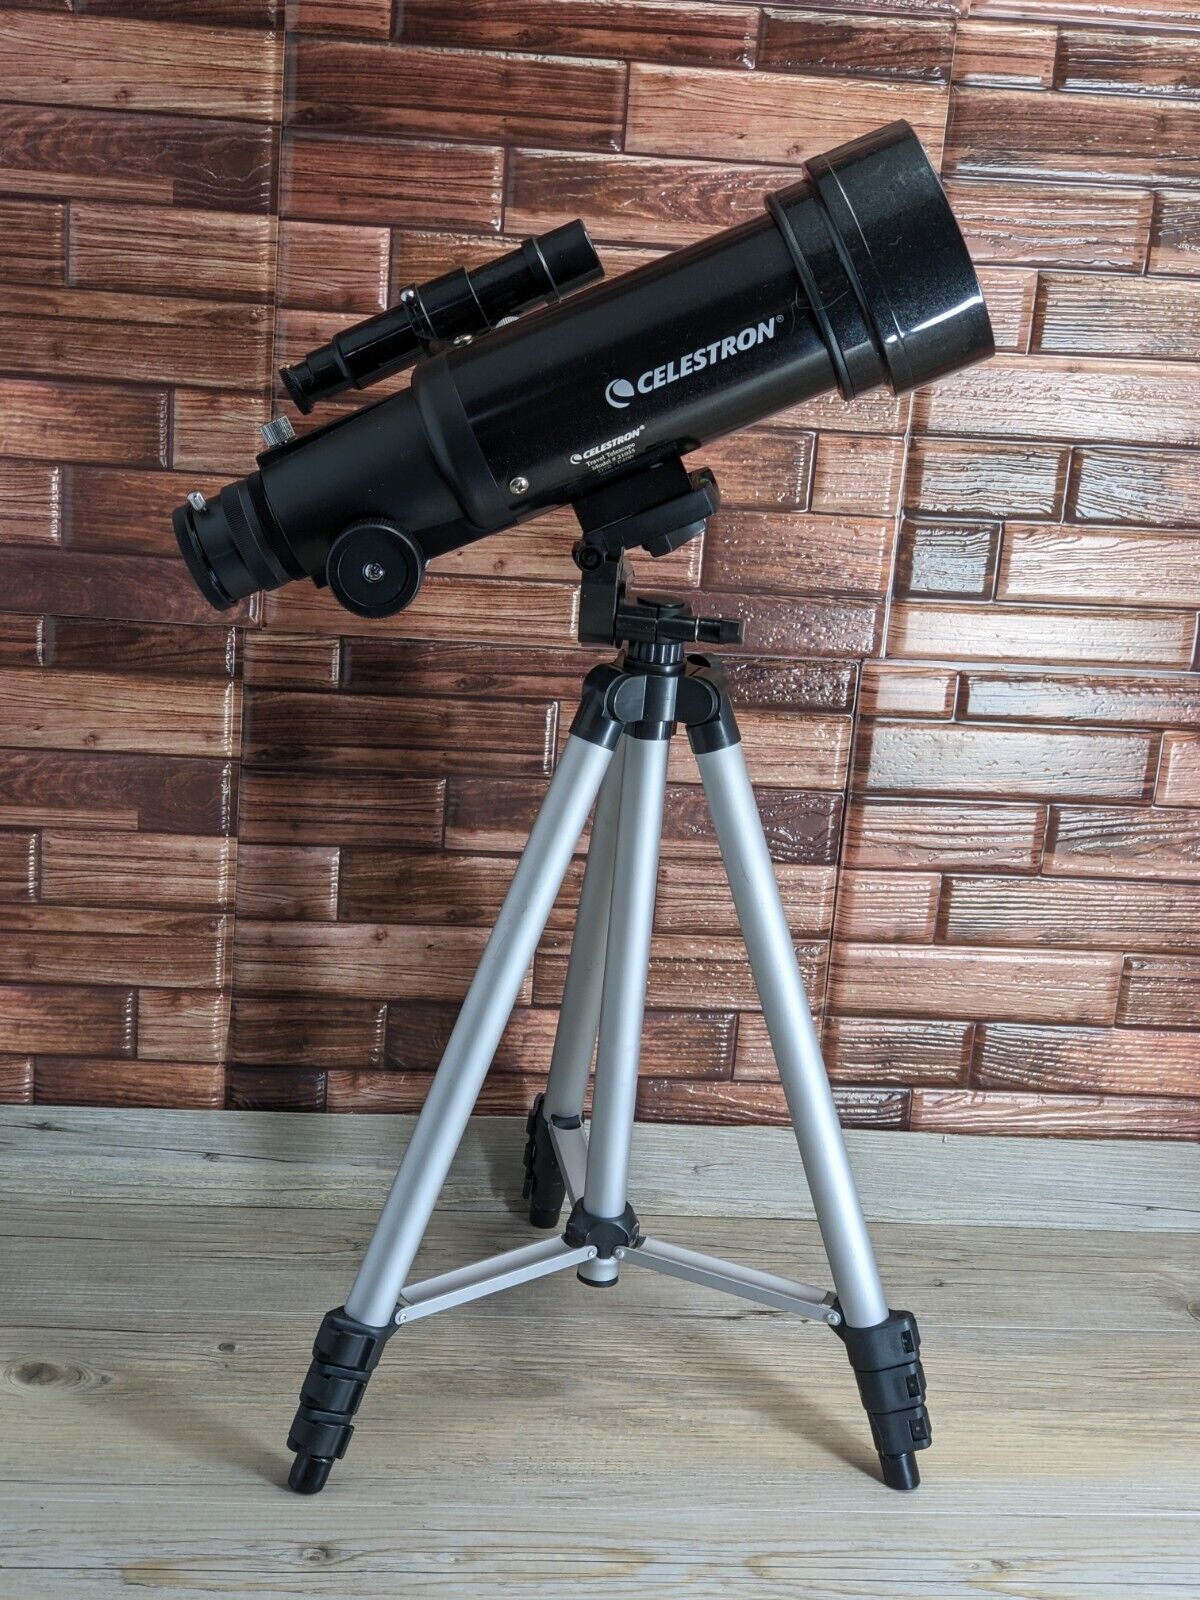 Celestron Travel Scope Compact Telescope 21035 70mm D70 / F400 Missing Eyepiece